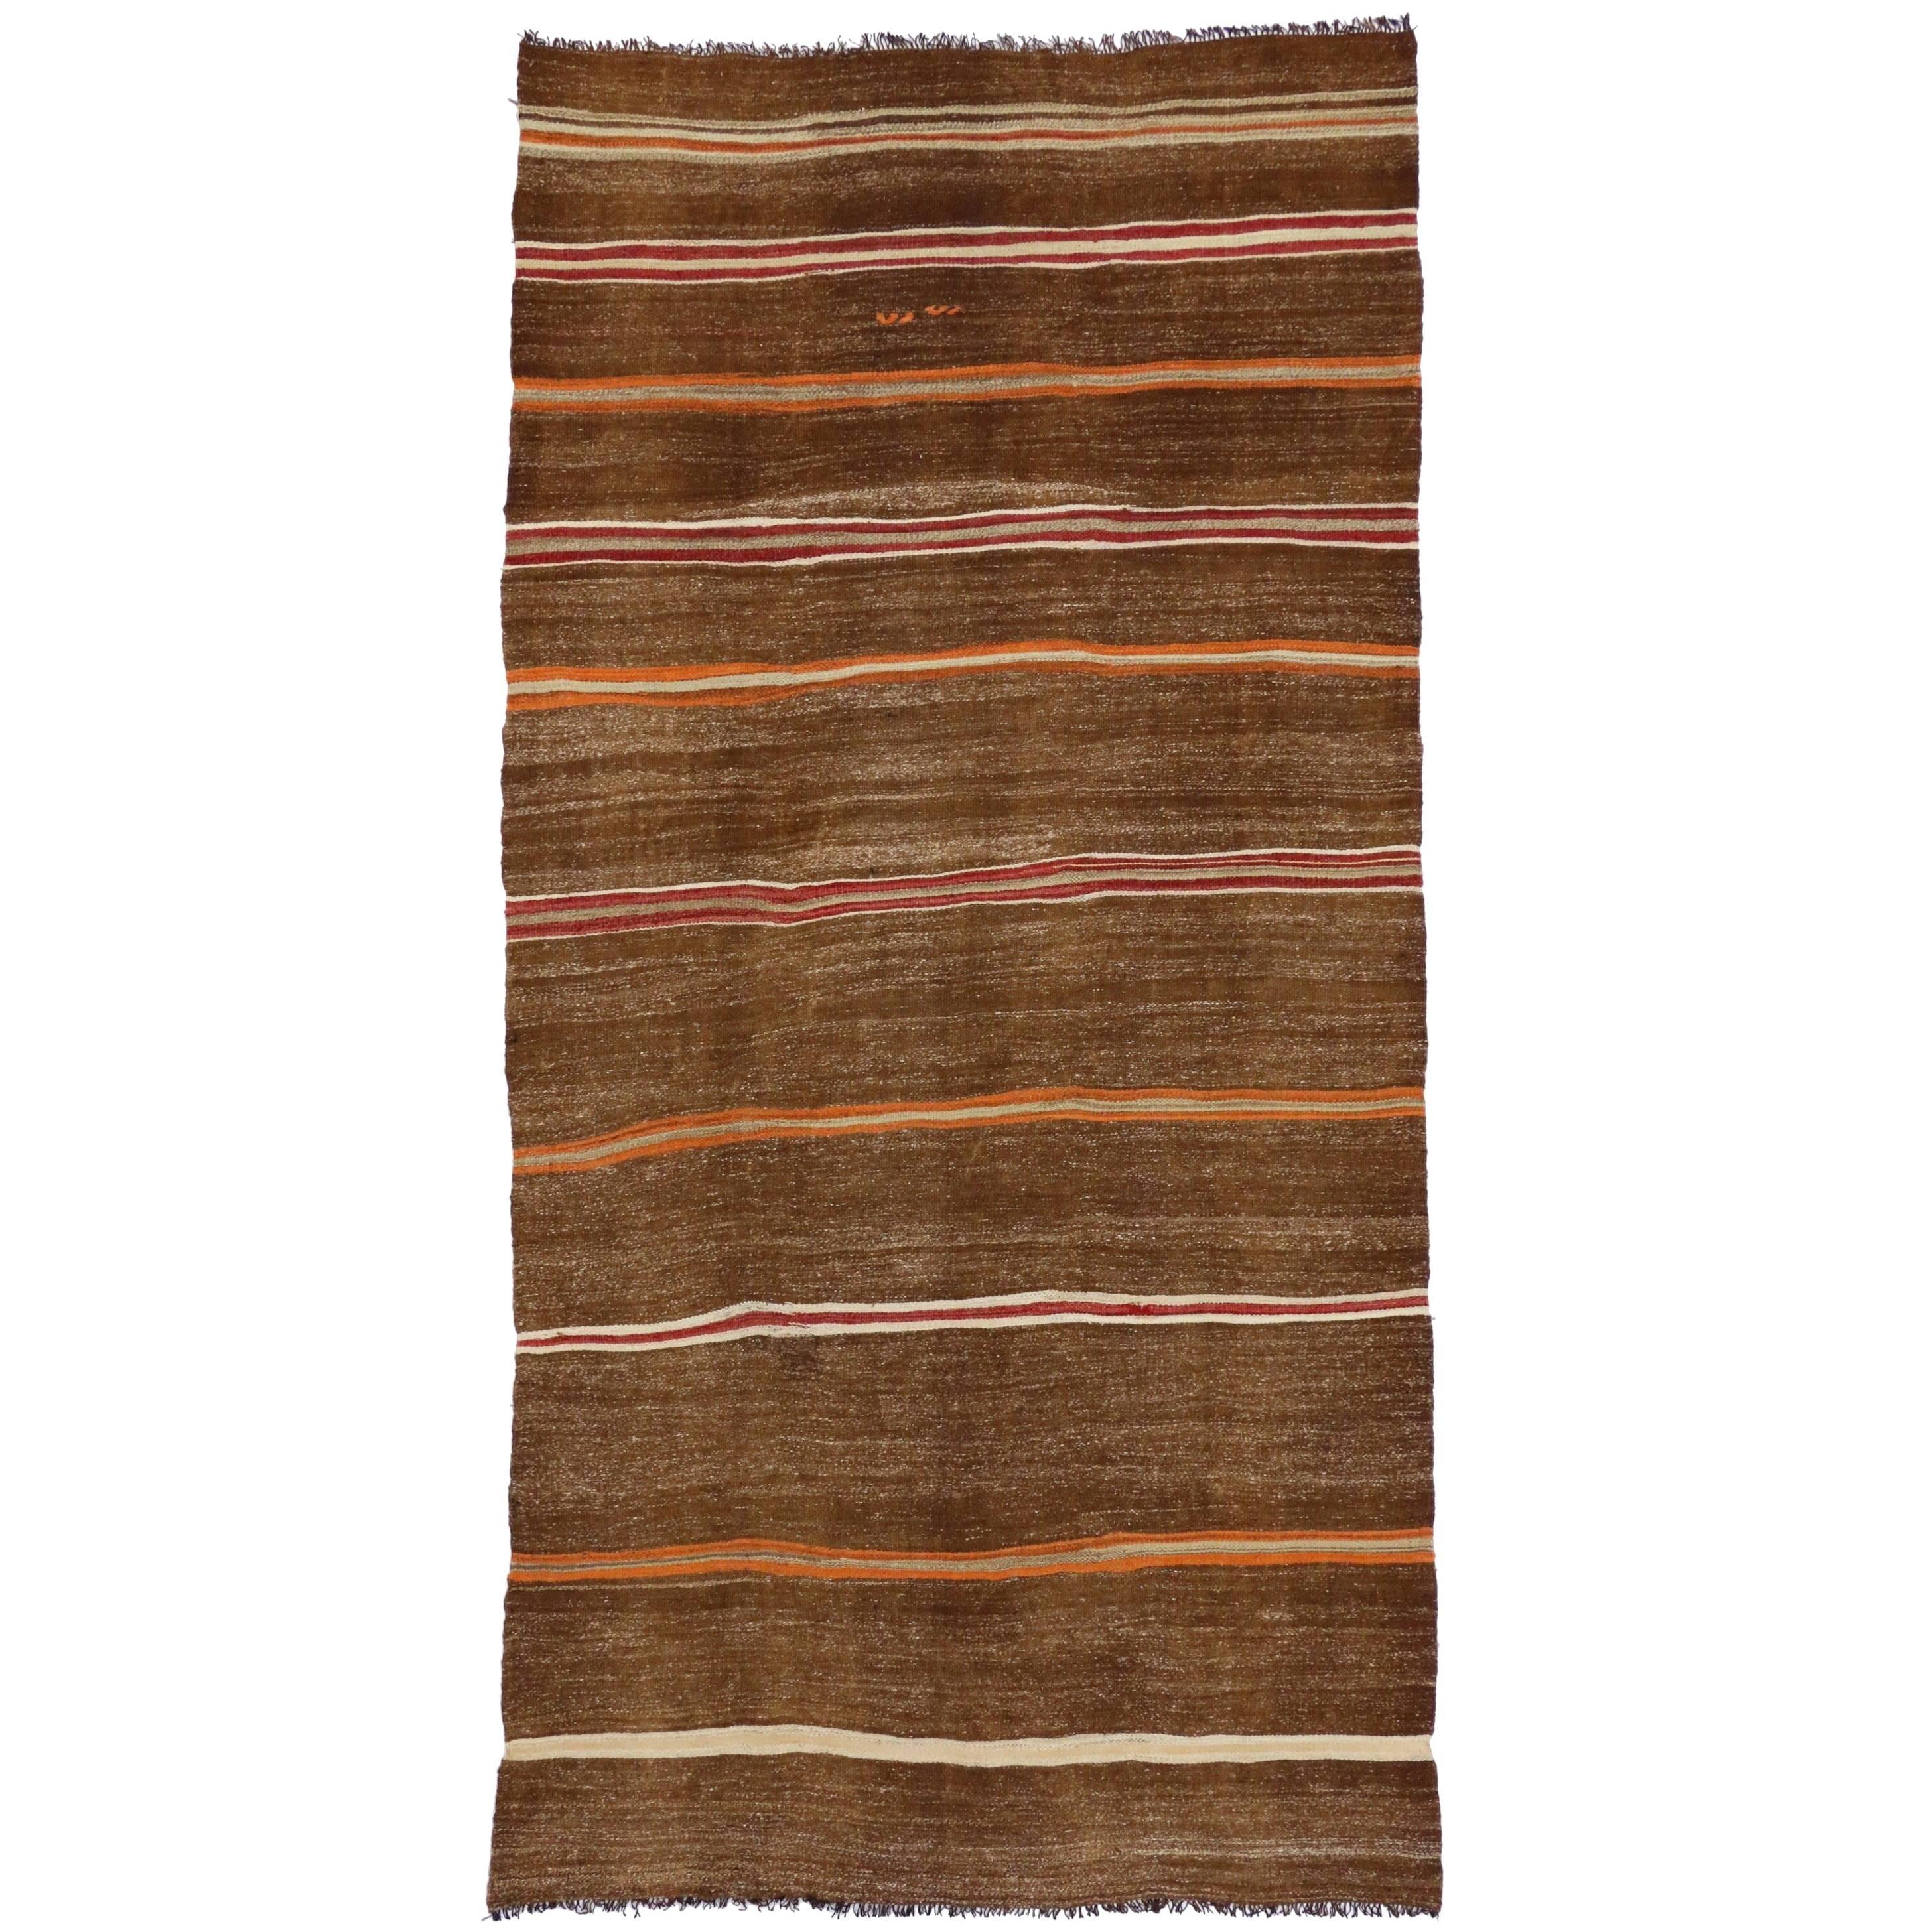 Vintage Turkish Striped Kilim Rug with Tribal Style, Flat-Weave Rug